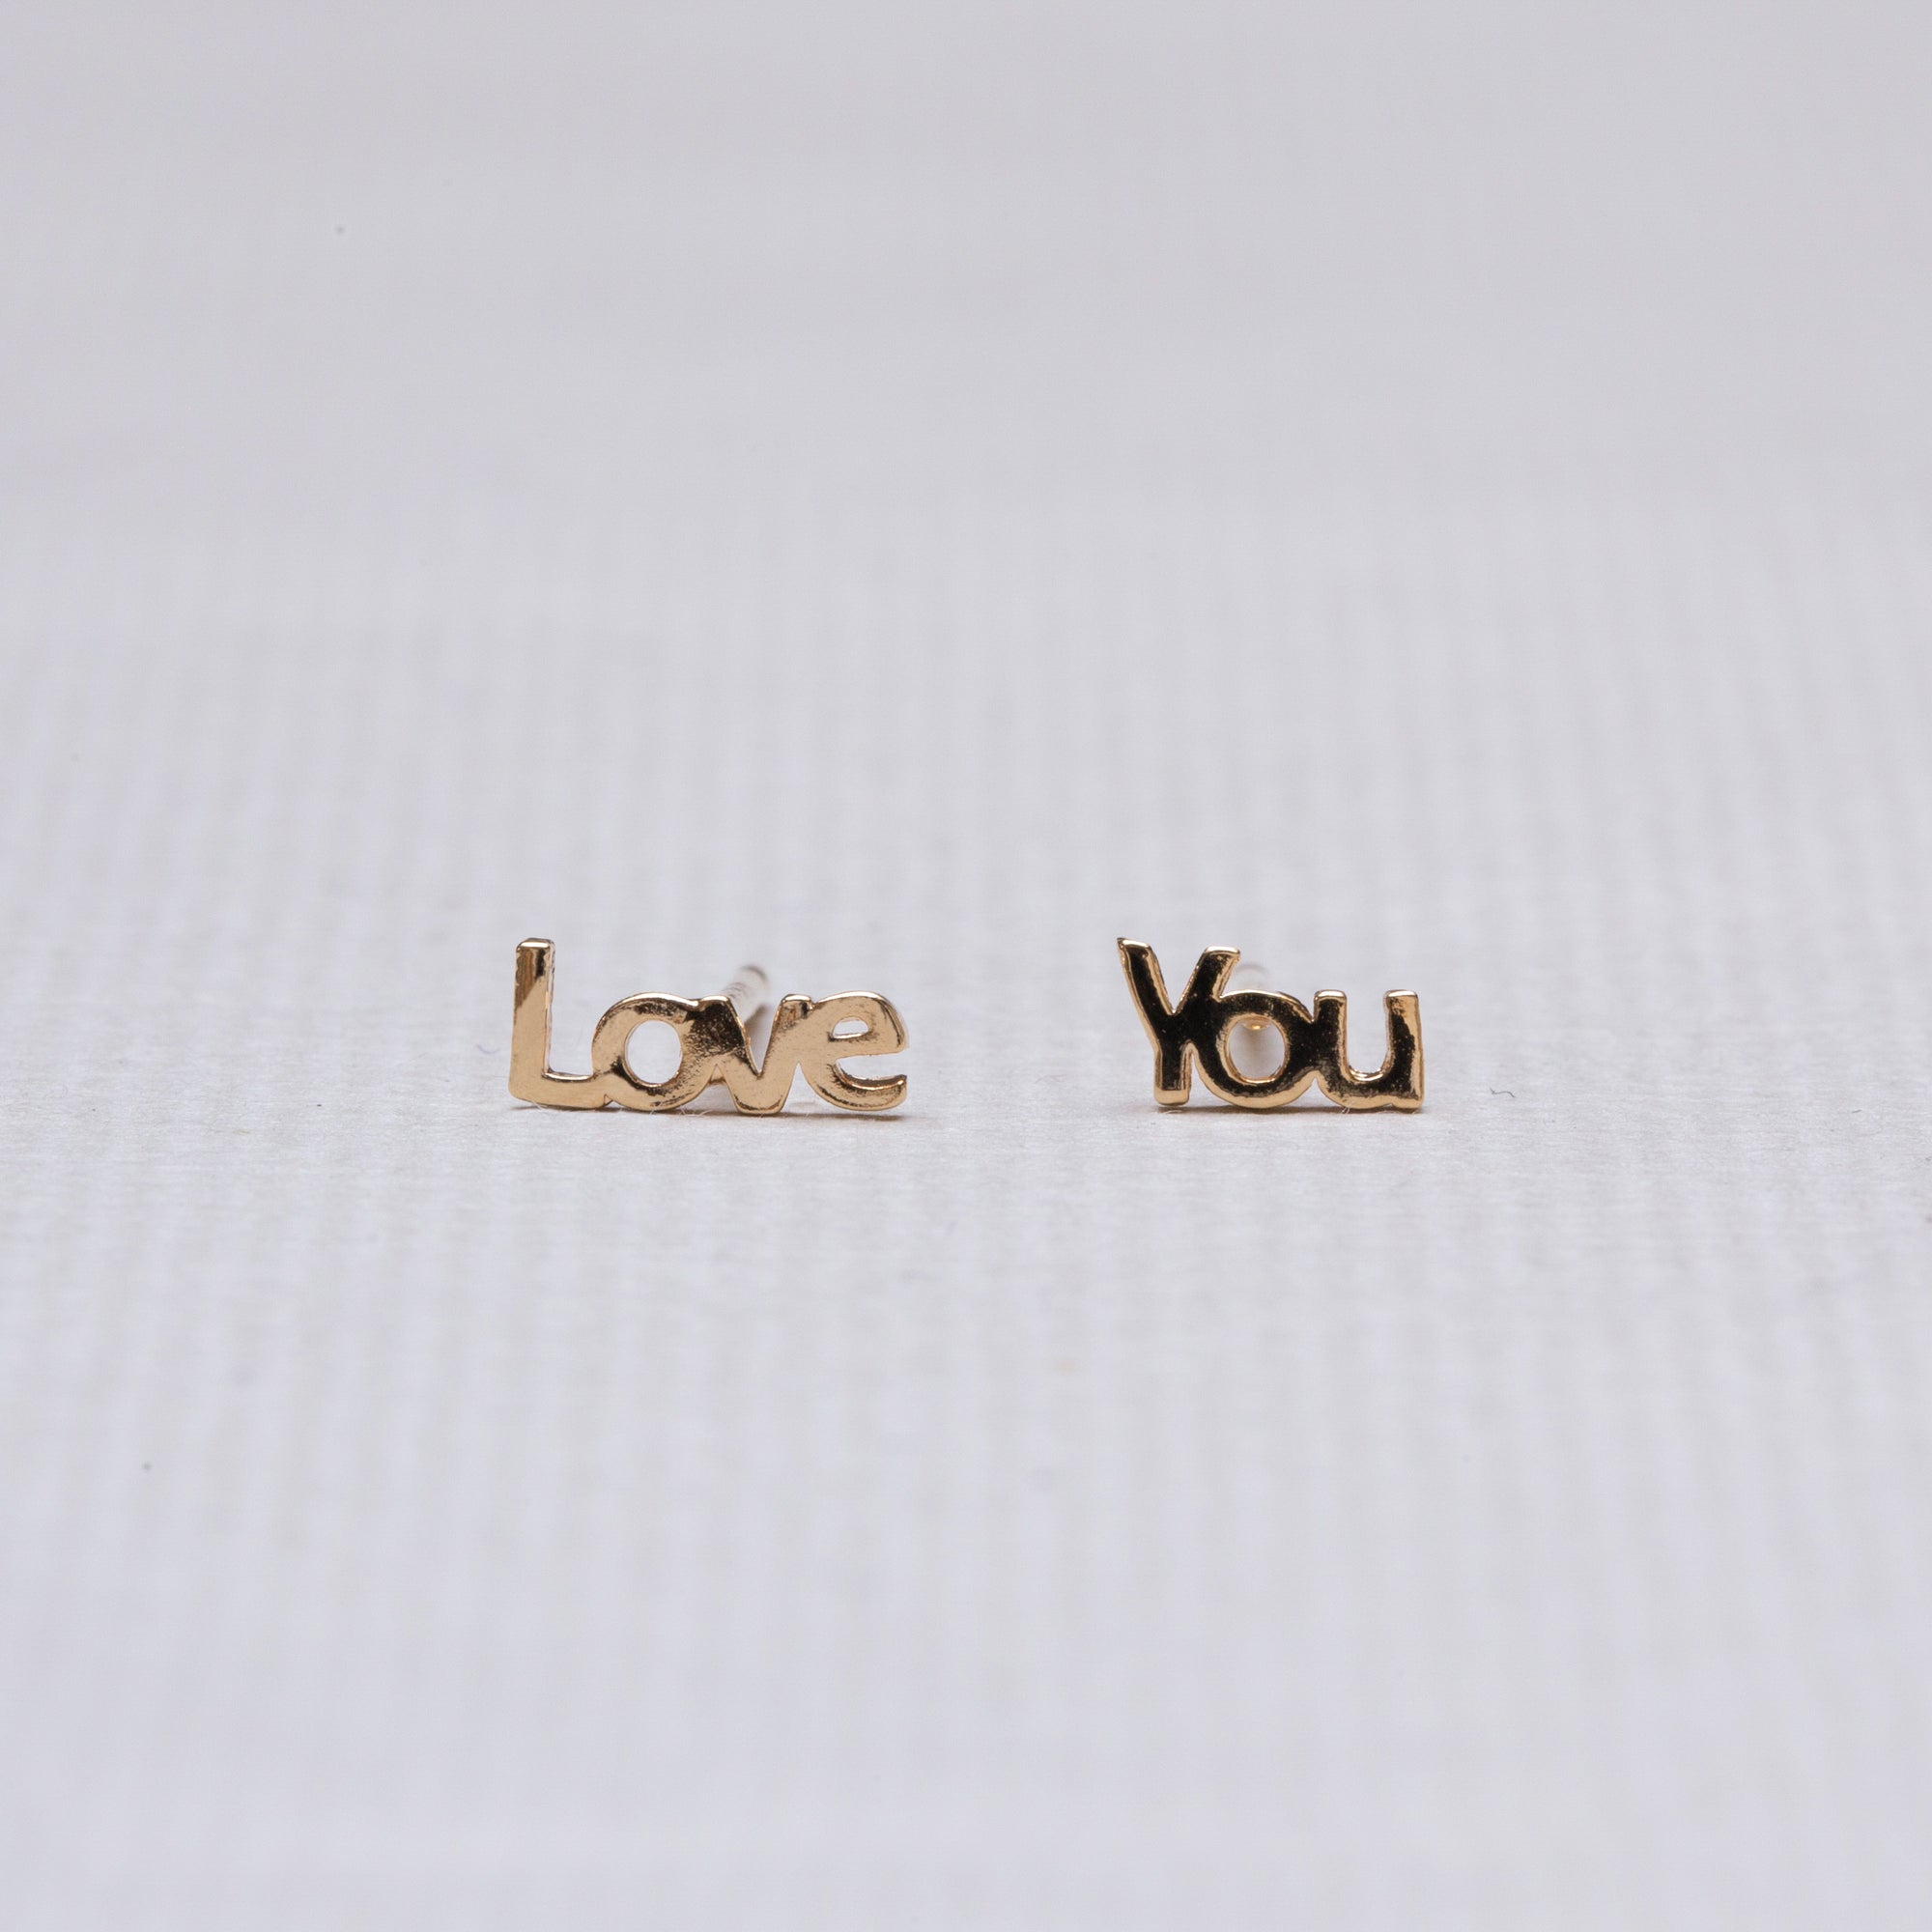 "Love You" Stud Earrings